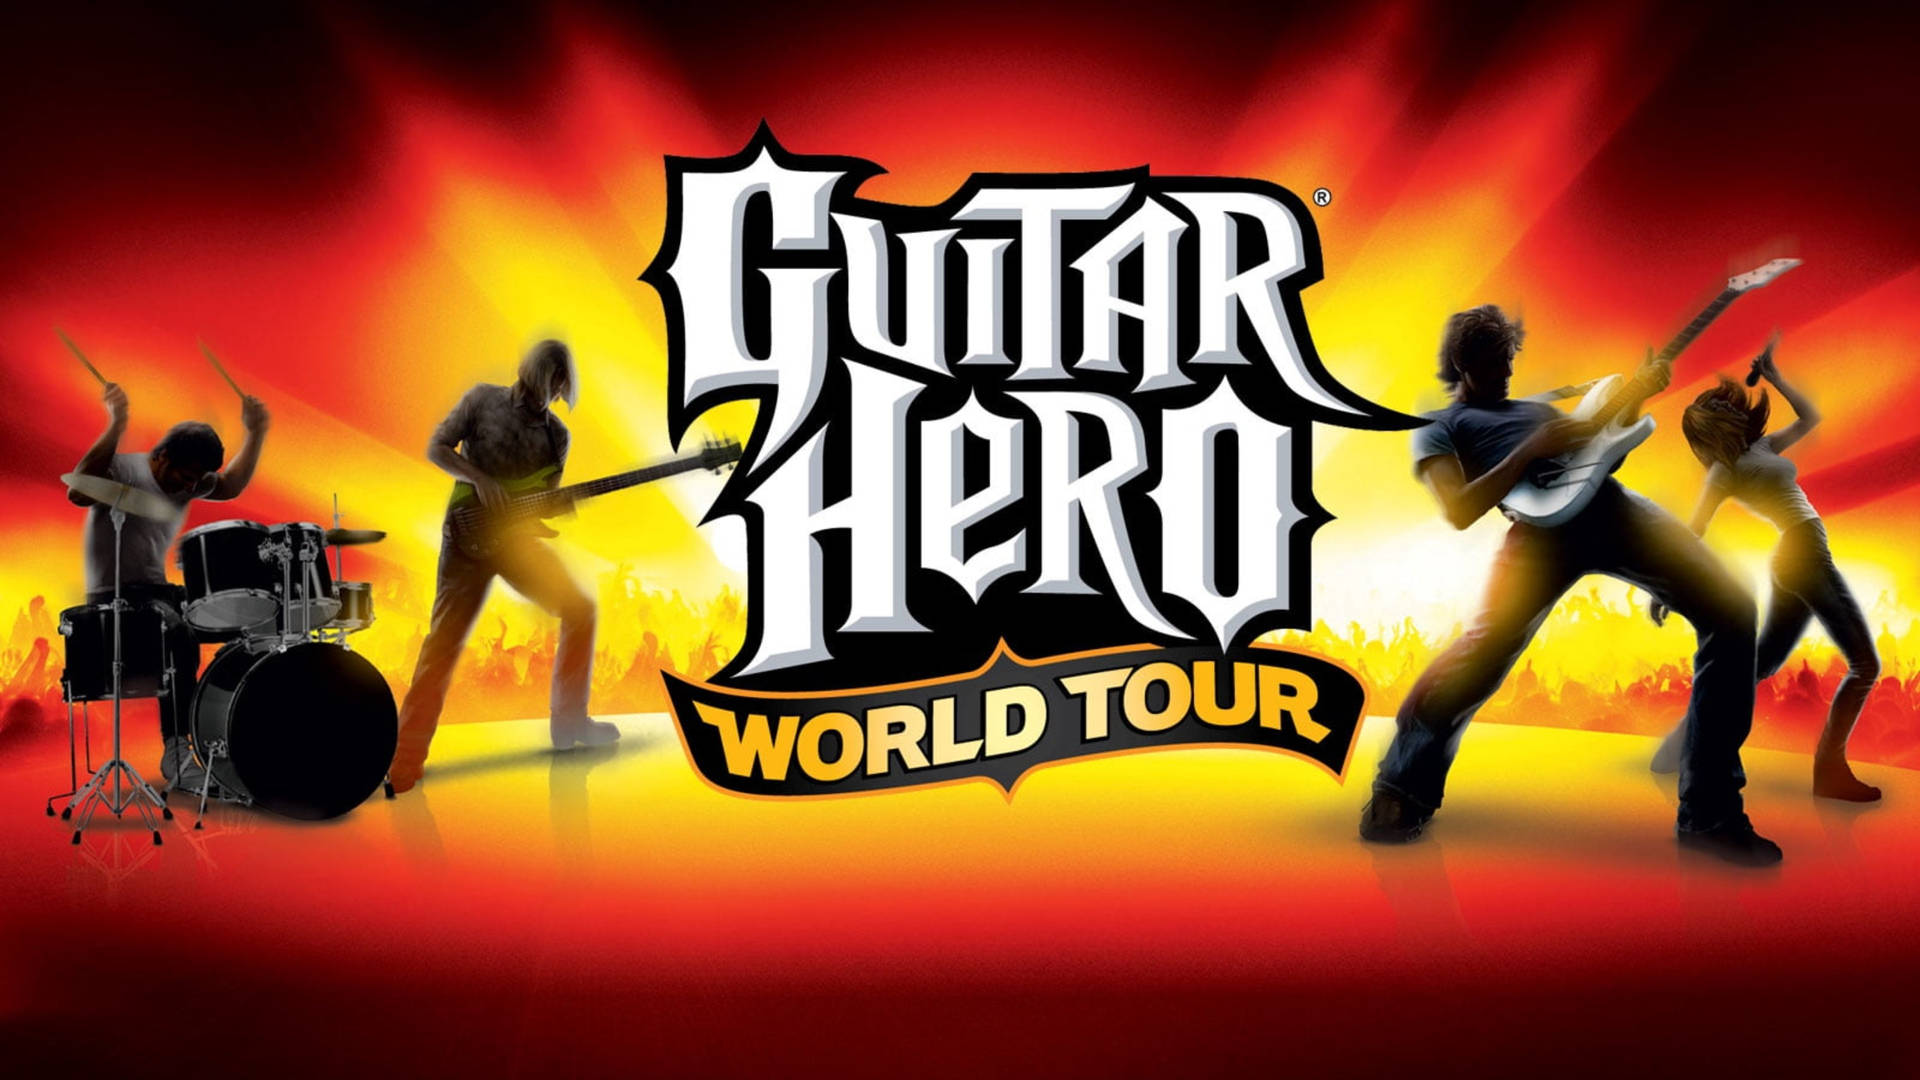 Guitar Hero World Tour Poster Background